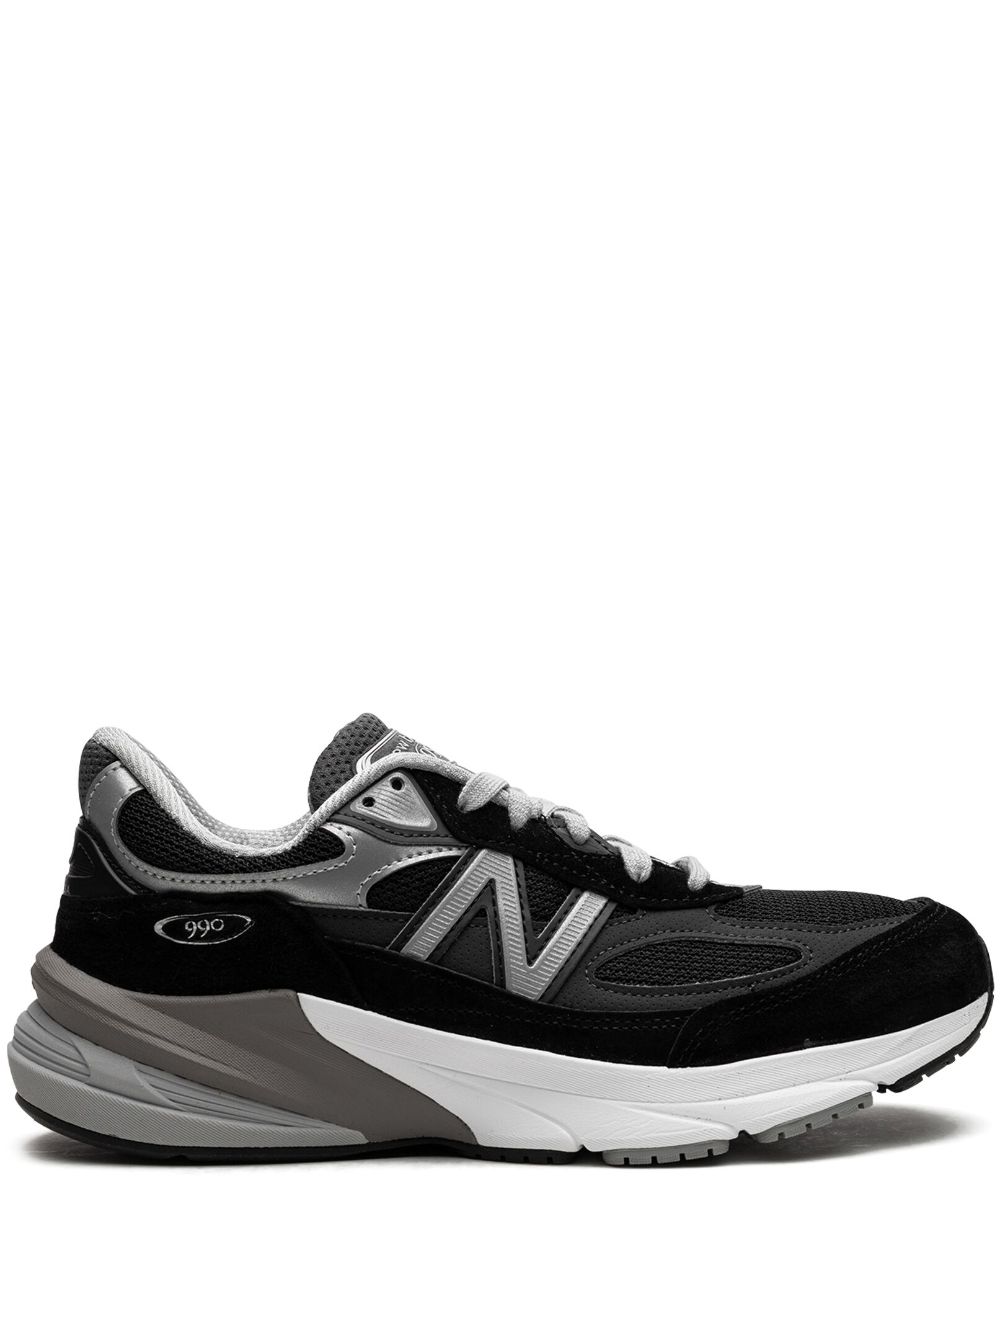 New Balance 990V6 "Black/Silver" sneakers - Grey